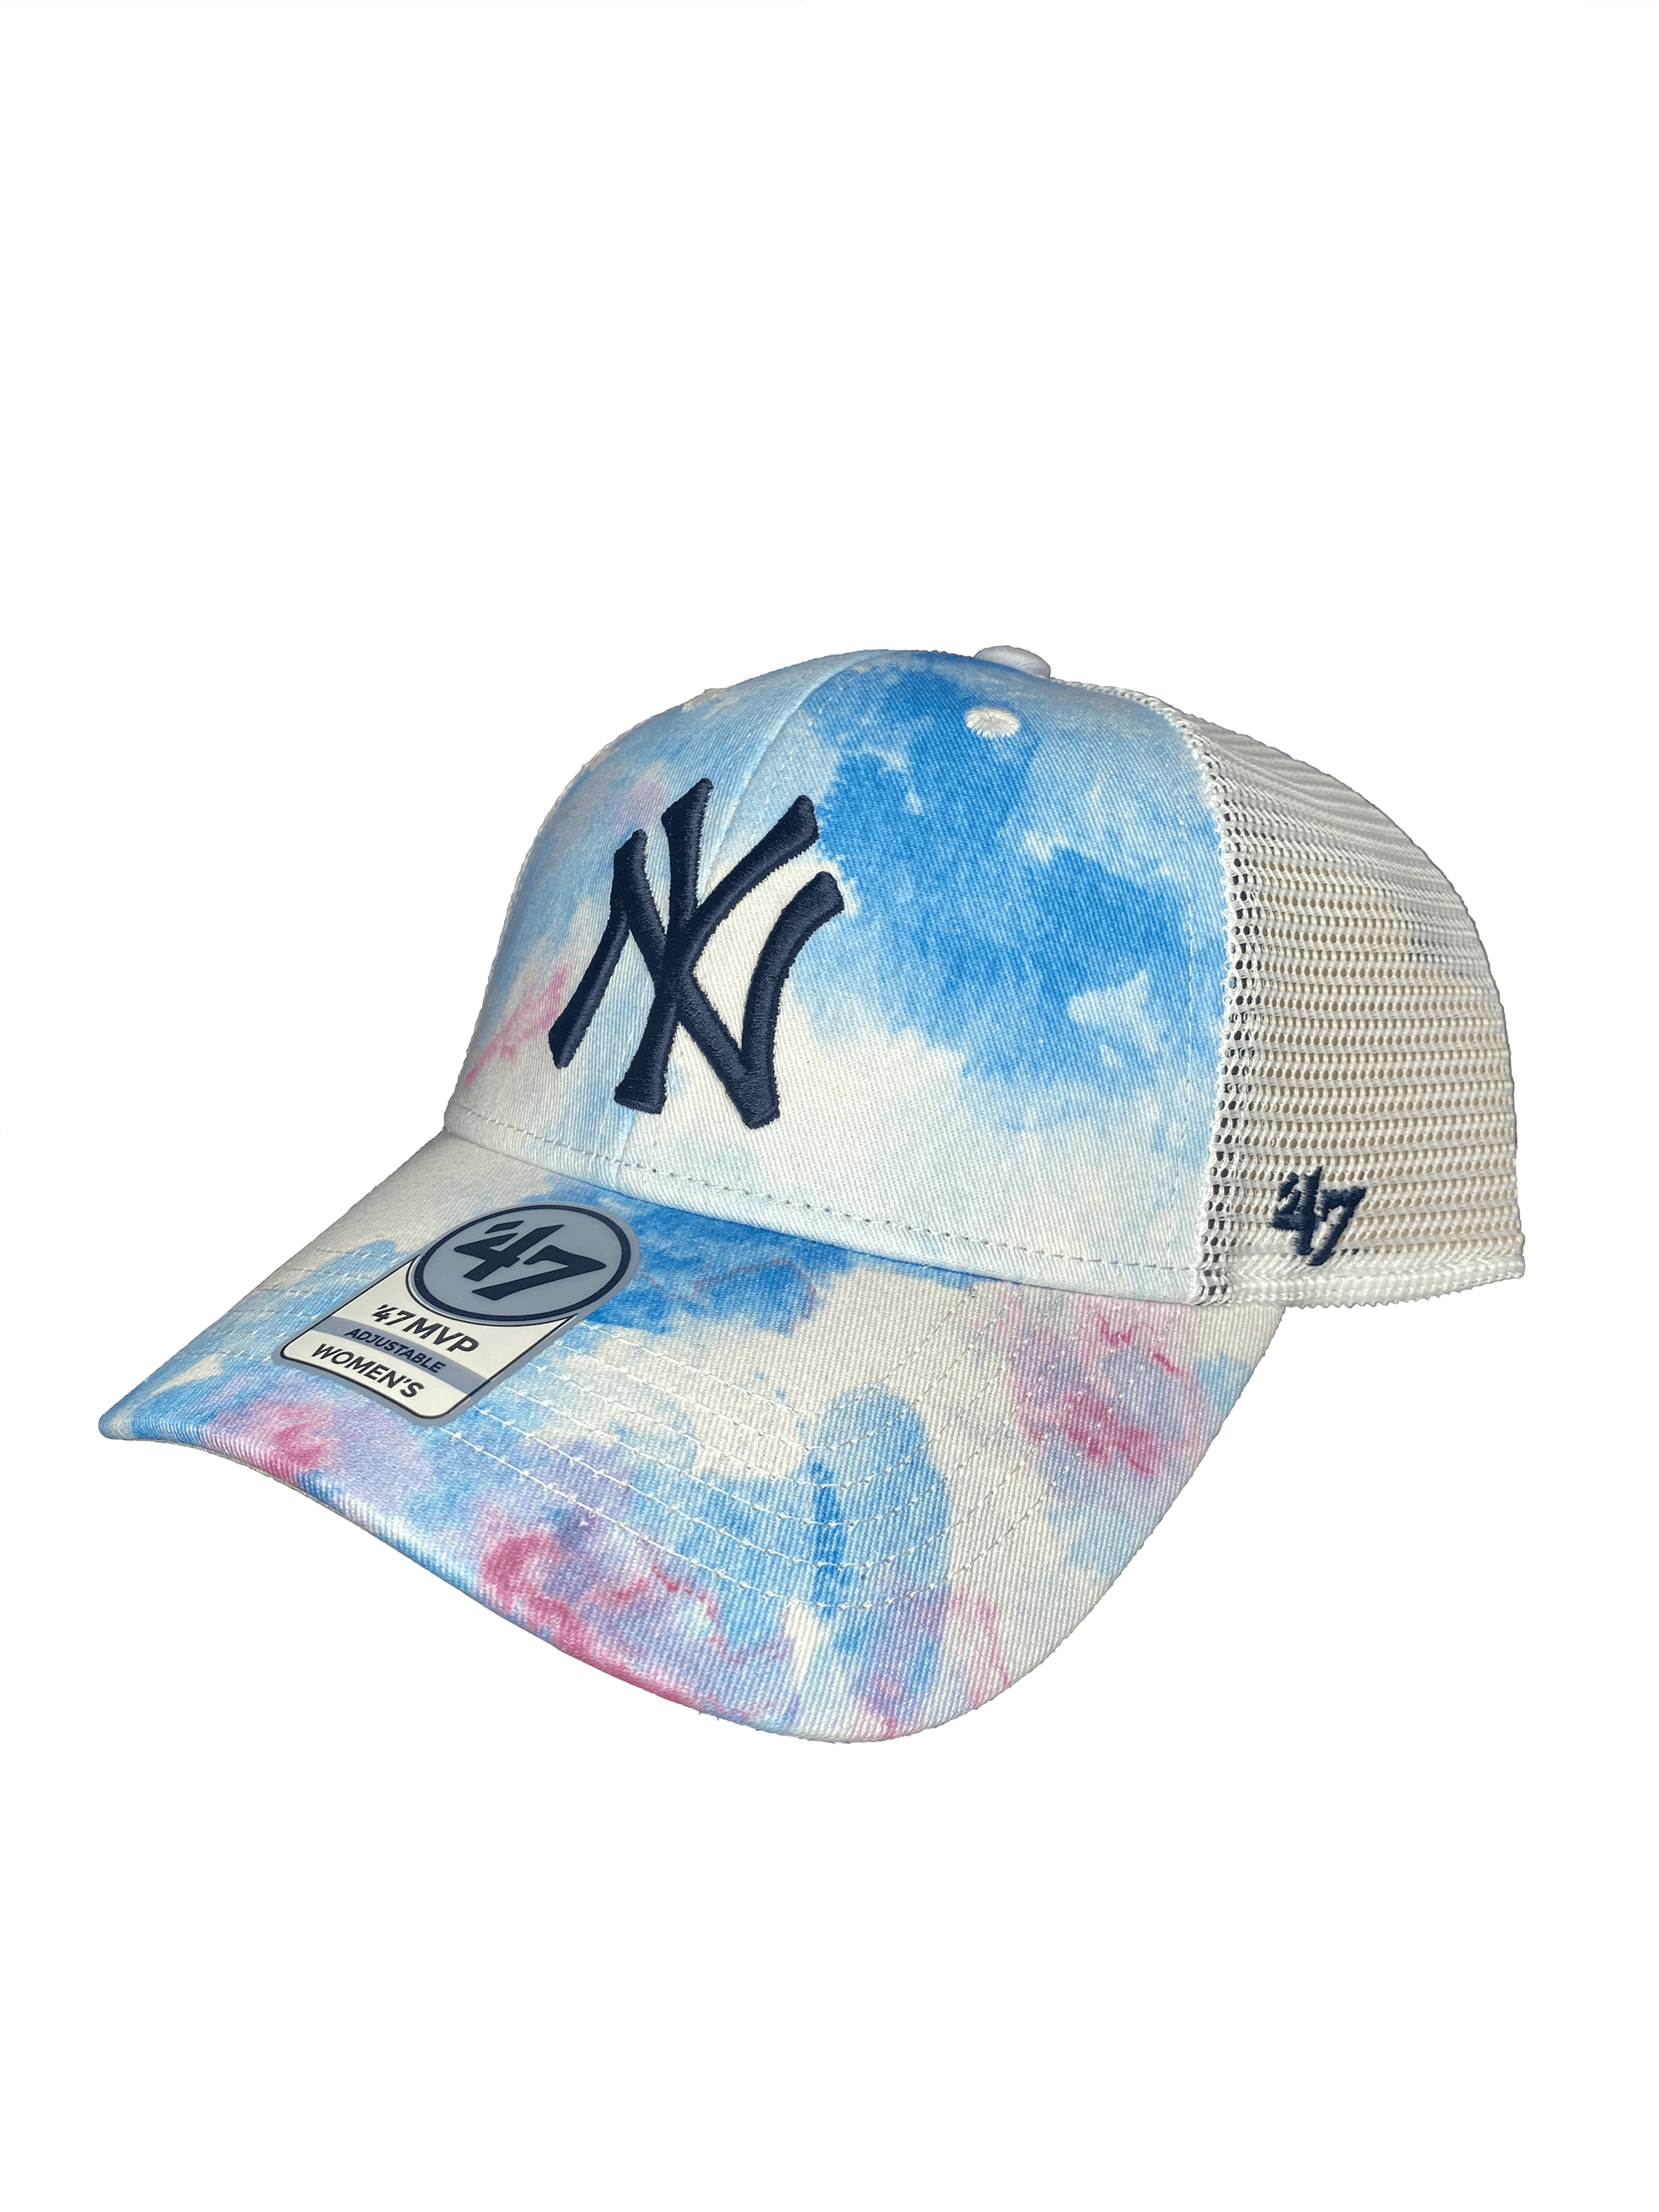 Baseball cap New York Yankees, baseball cap, hat, mLB, baseball png